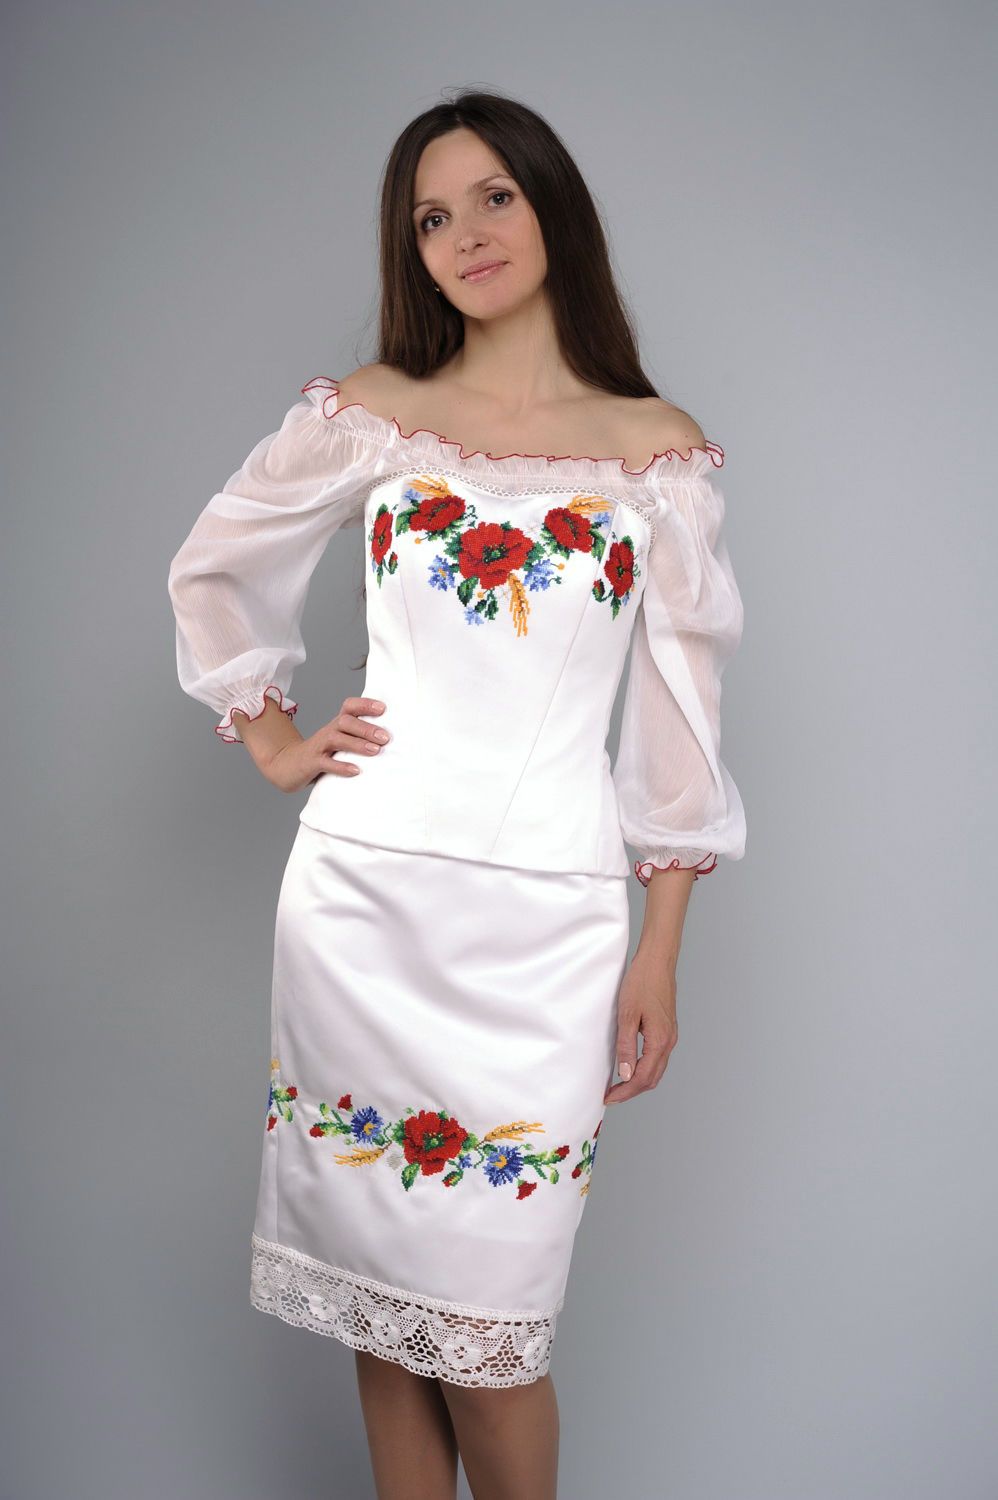 Costume blanc femme style ethnique photo 3